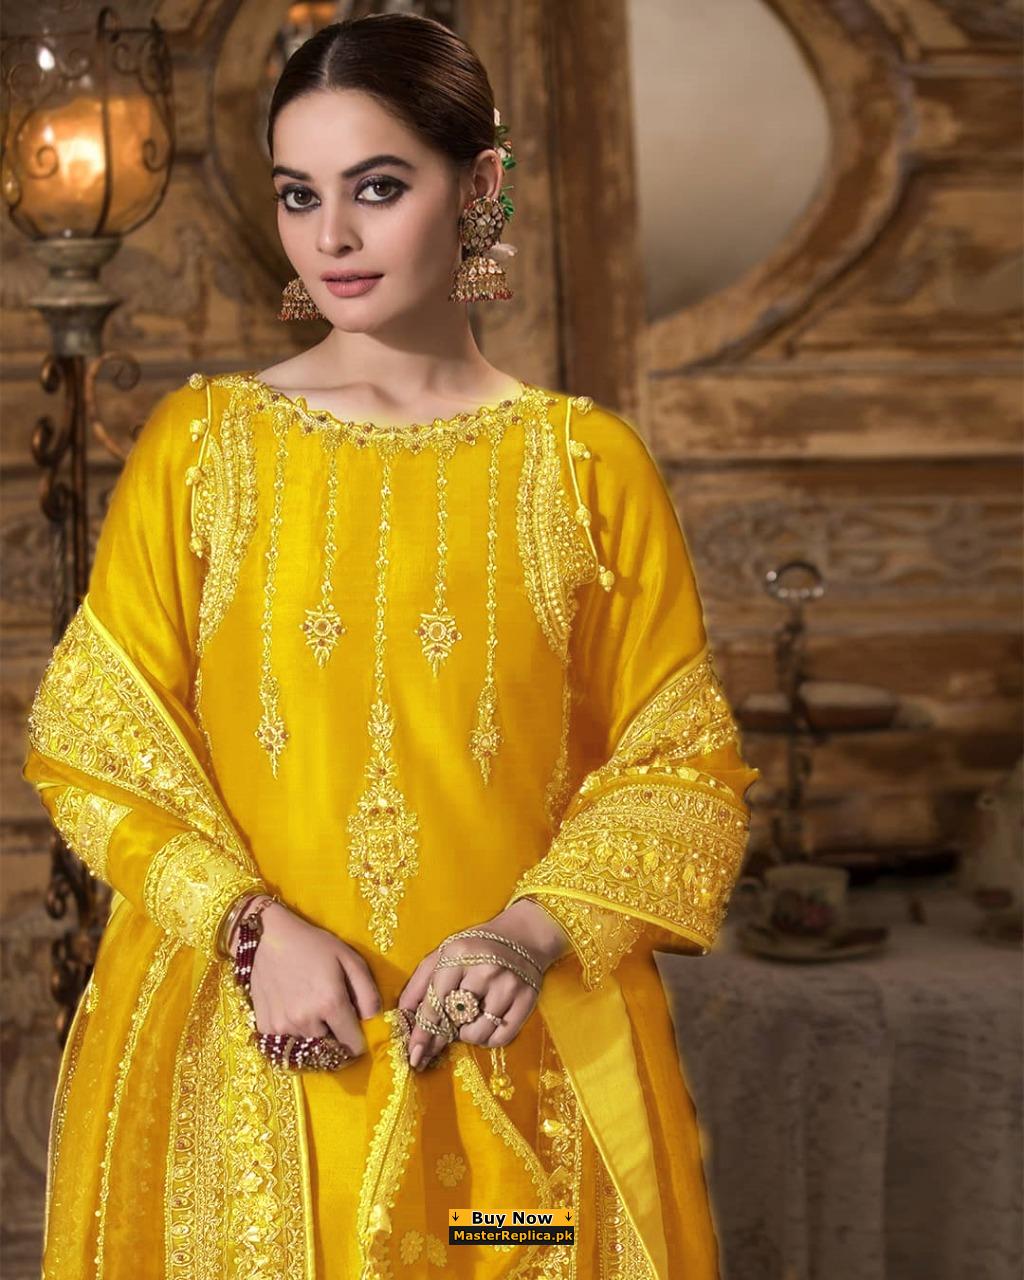 Royal Pakistani Yellow Dress for Mehndi Function Online – Nameera by Farooq